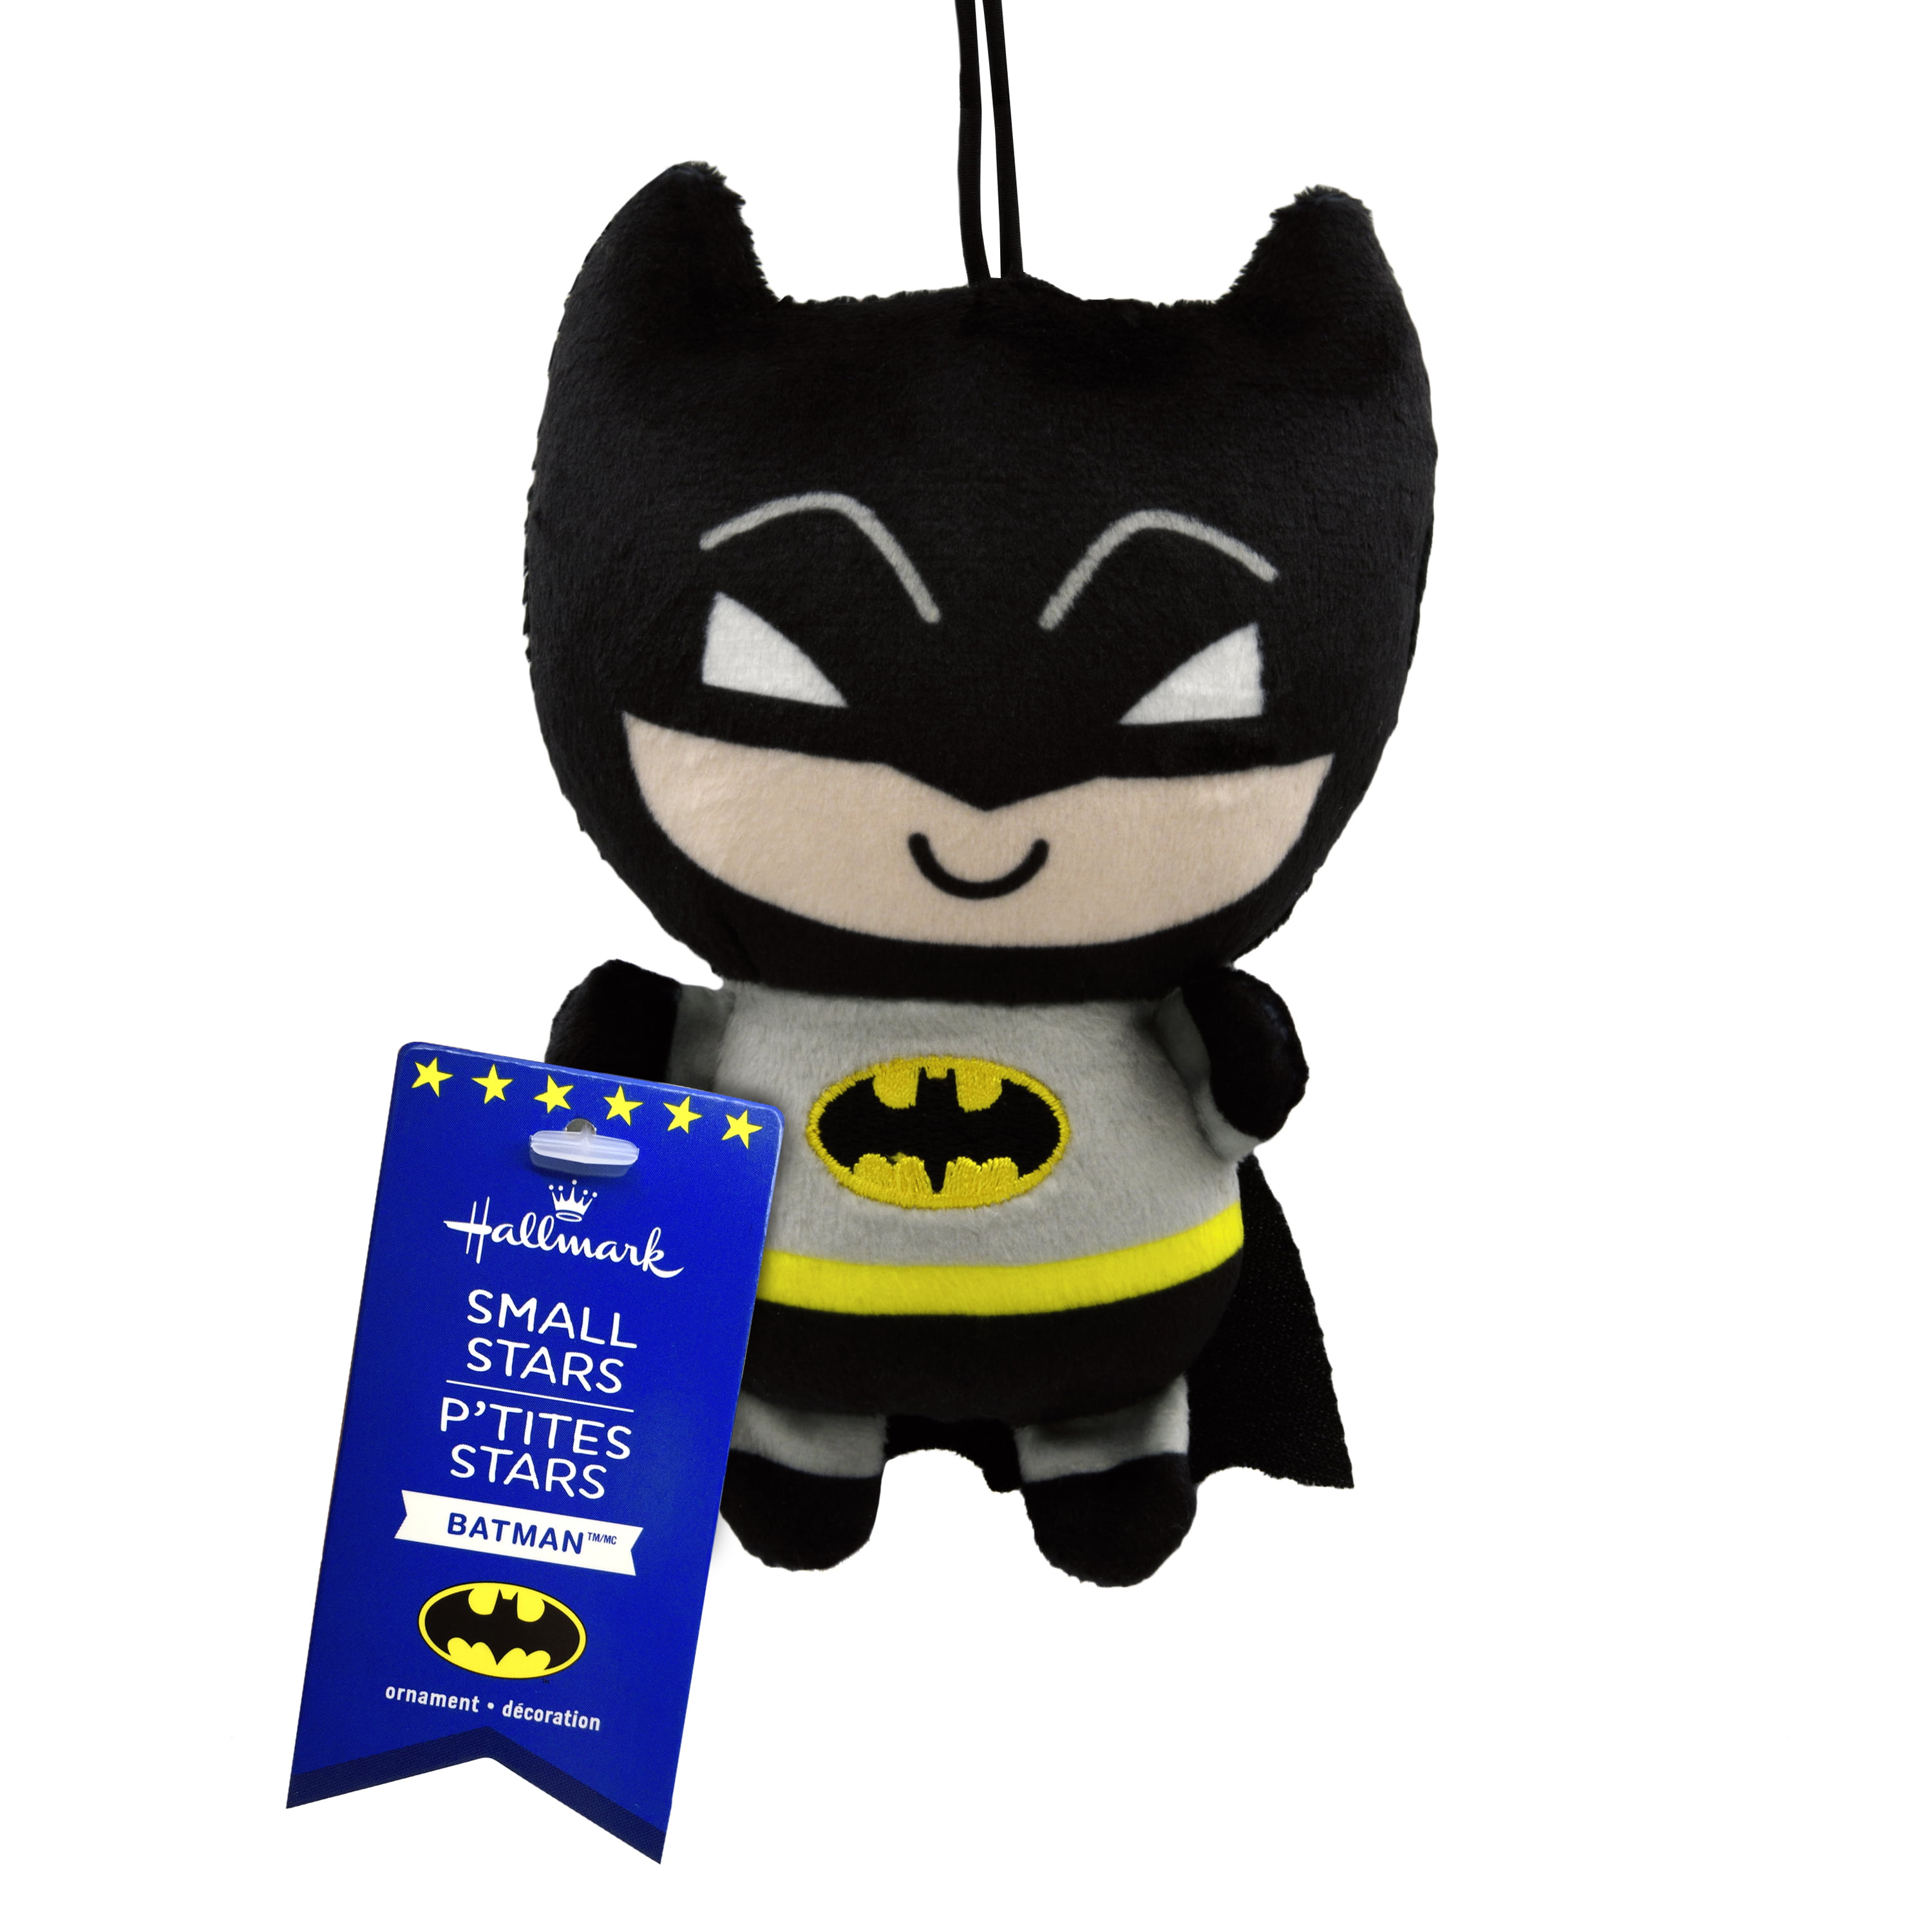 Batman Confetti Hallmark Mktg Corp each 